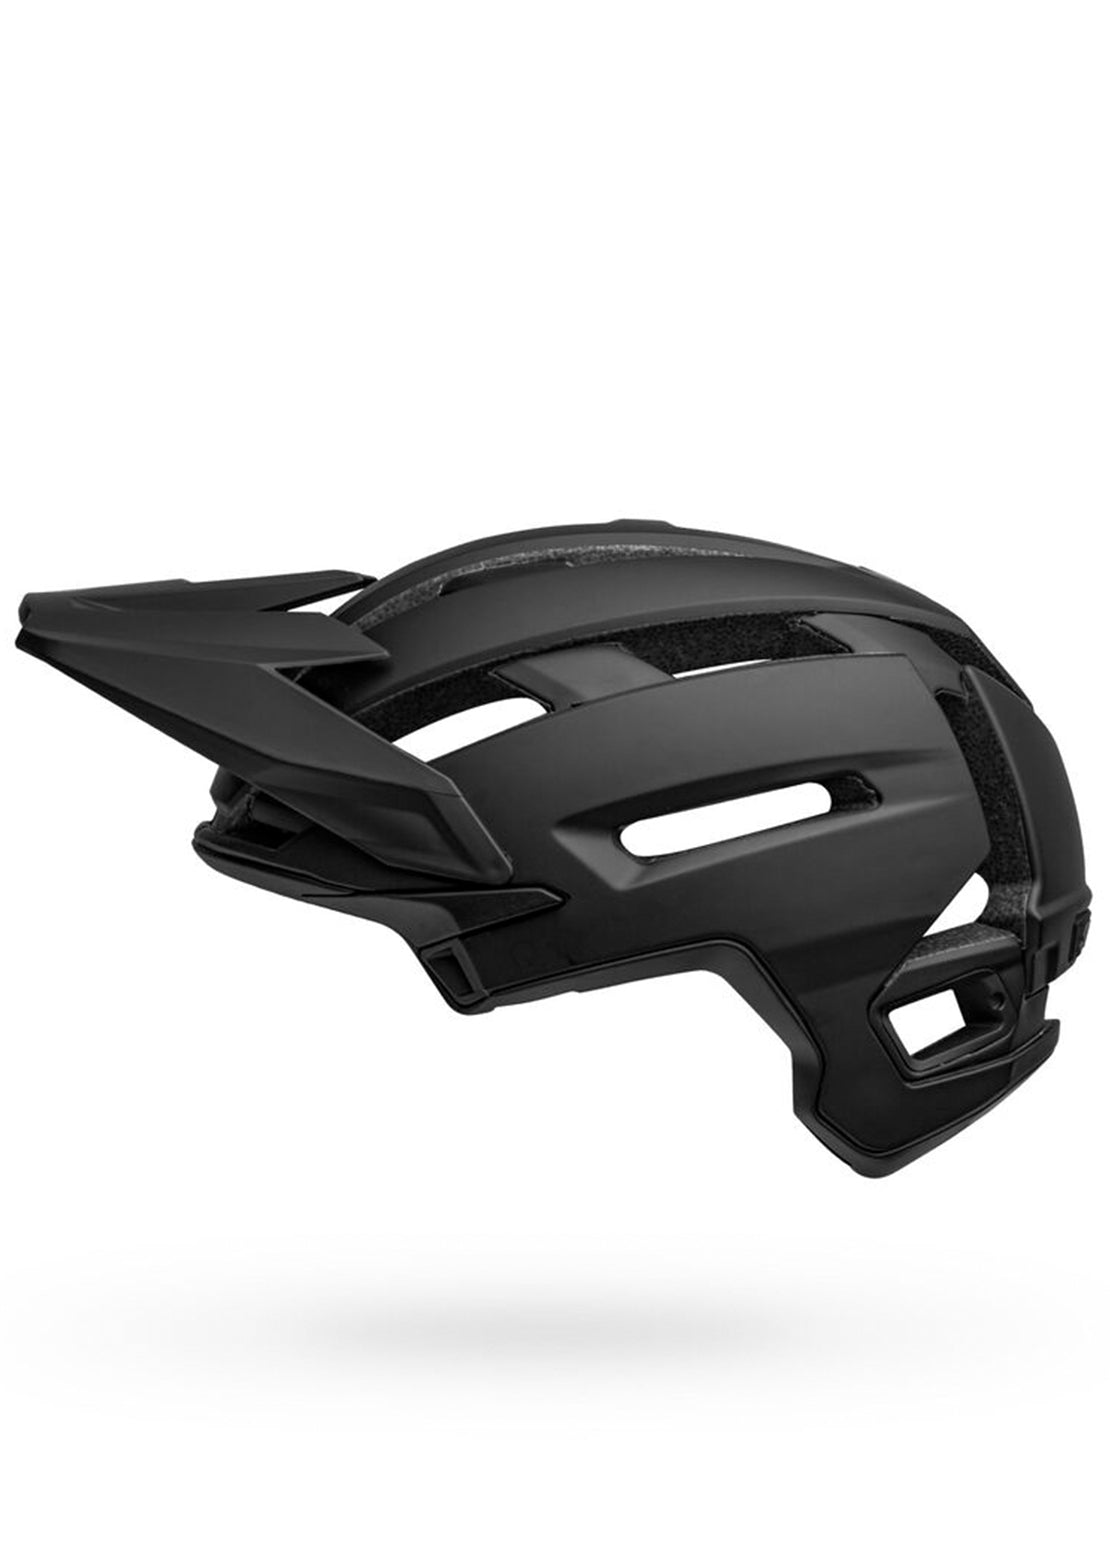 Bell Core Super Air R Spherical Mountain Bike Helmet Black